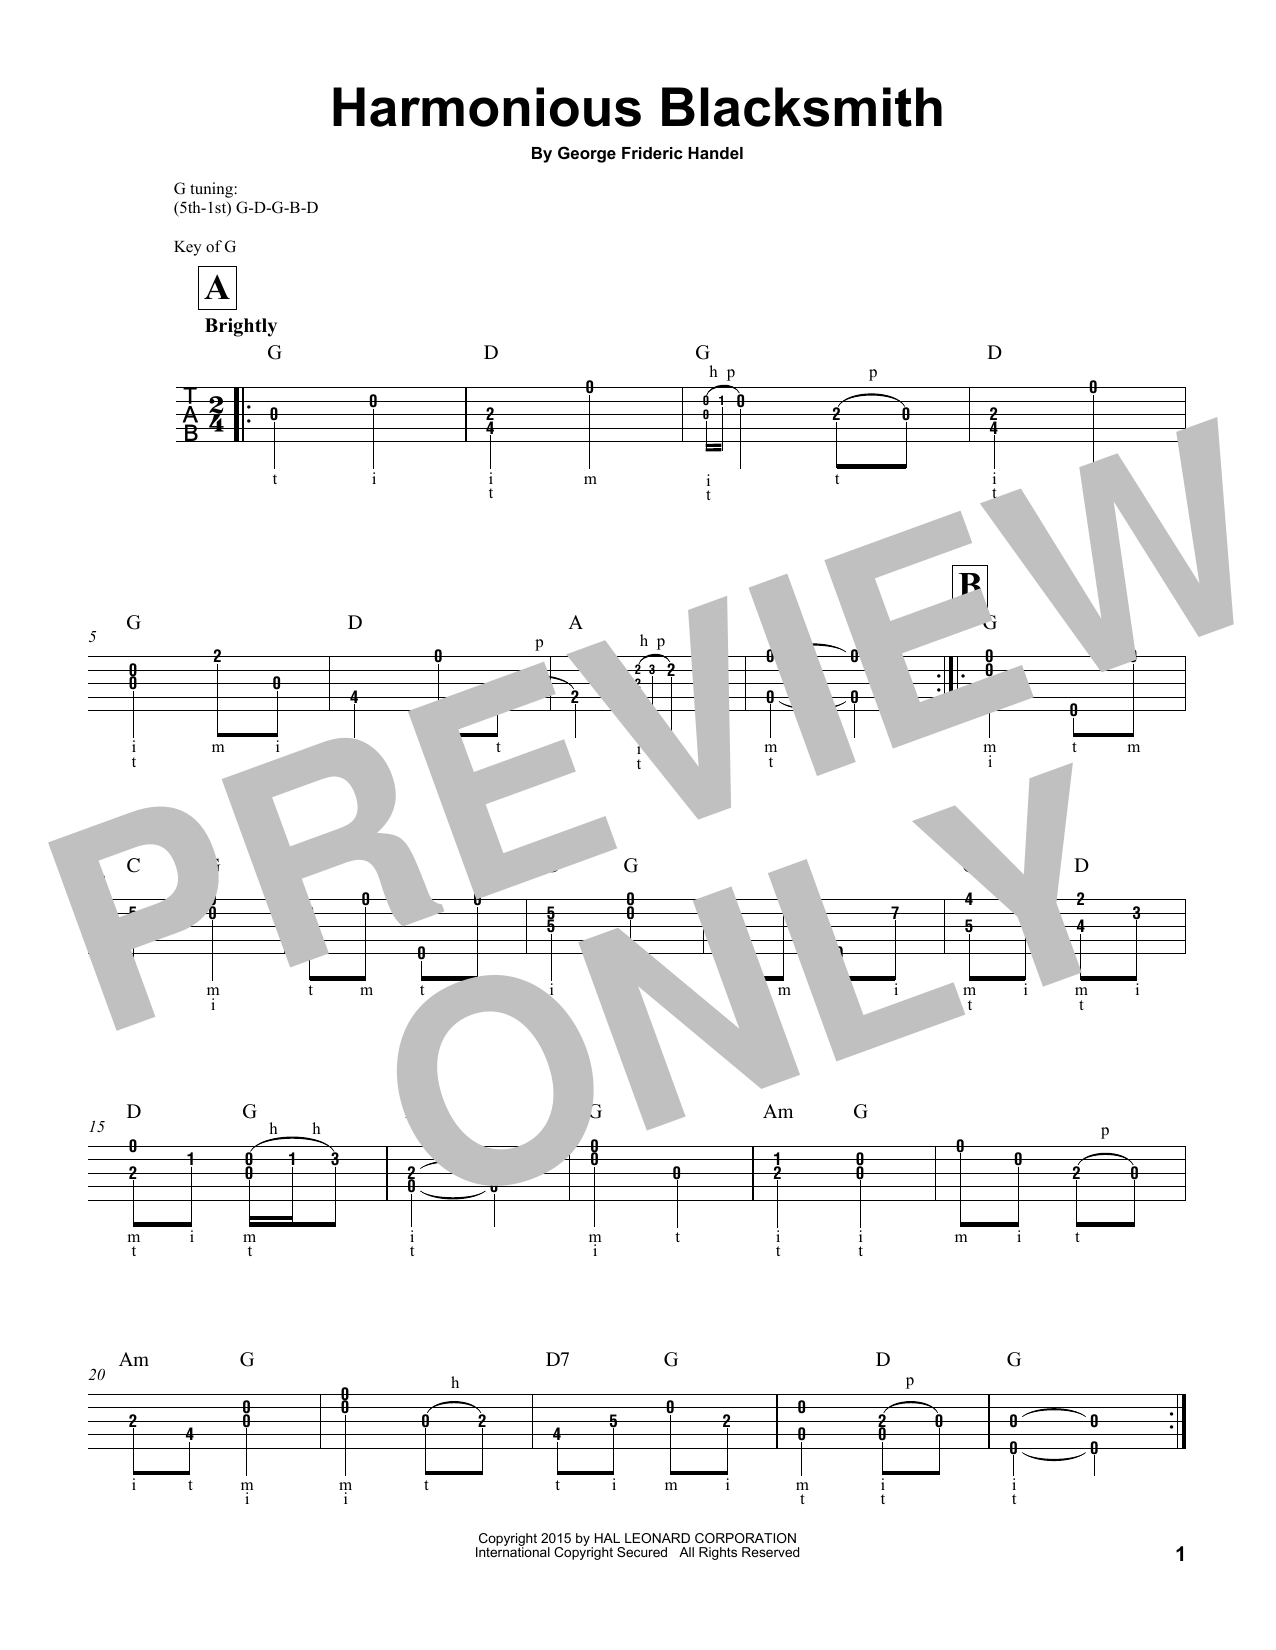 George Frideric Handel Harmonious Blacksmith Sheet Music Notes & Chords for Banjo - Download or Print PDF